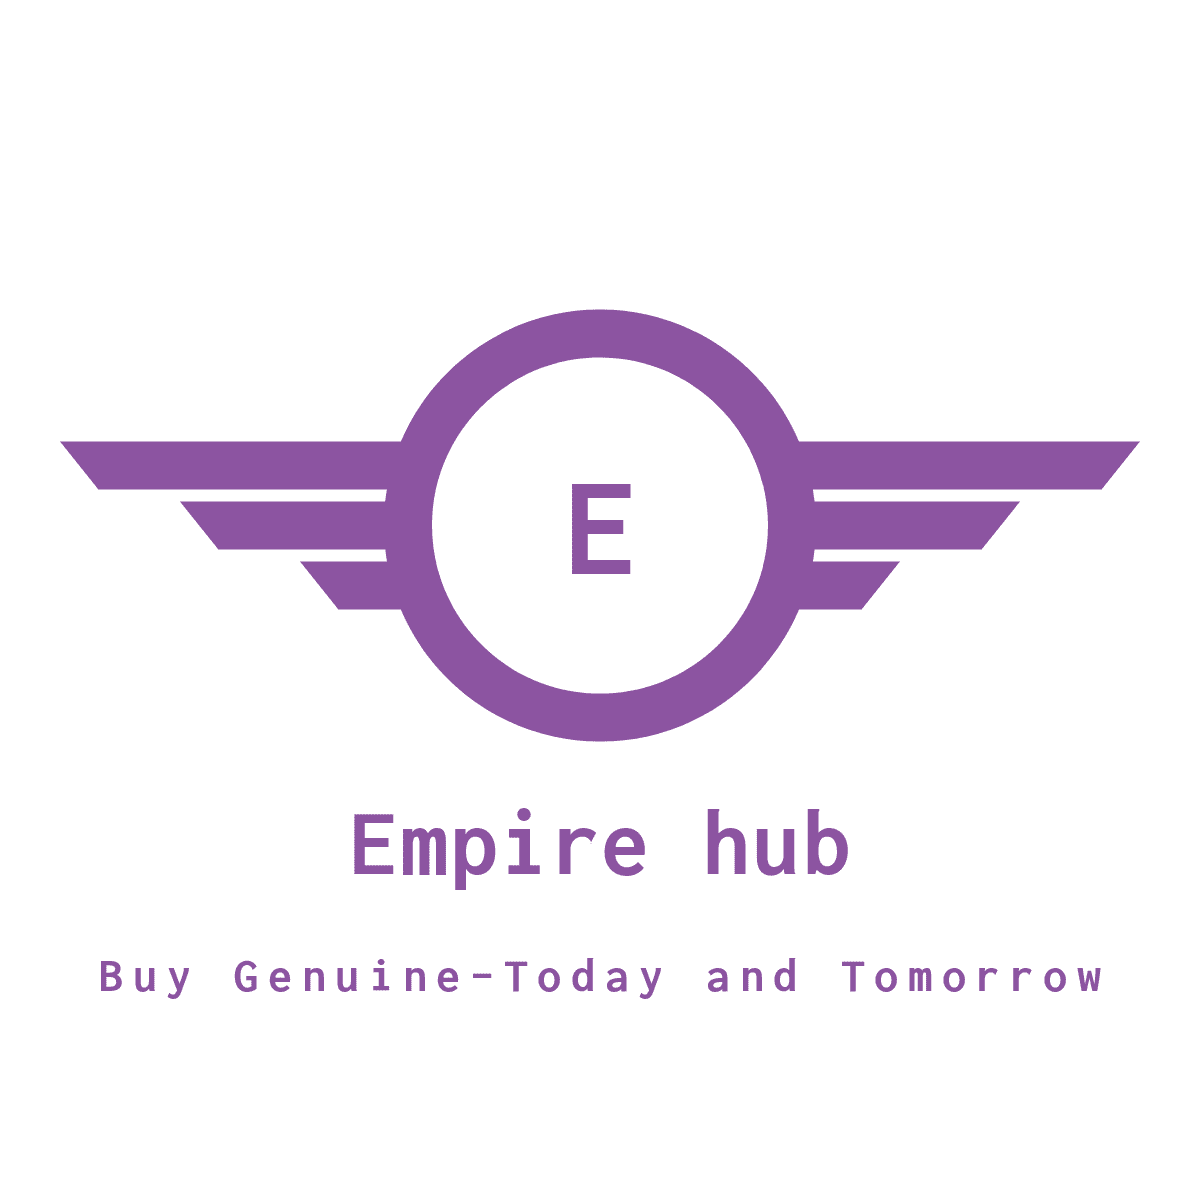 Empire hub